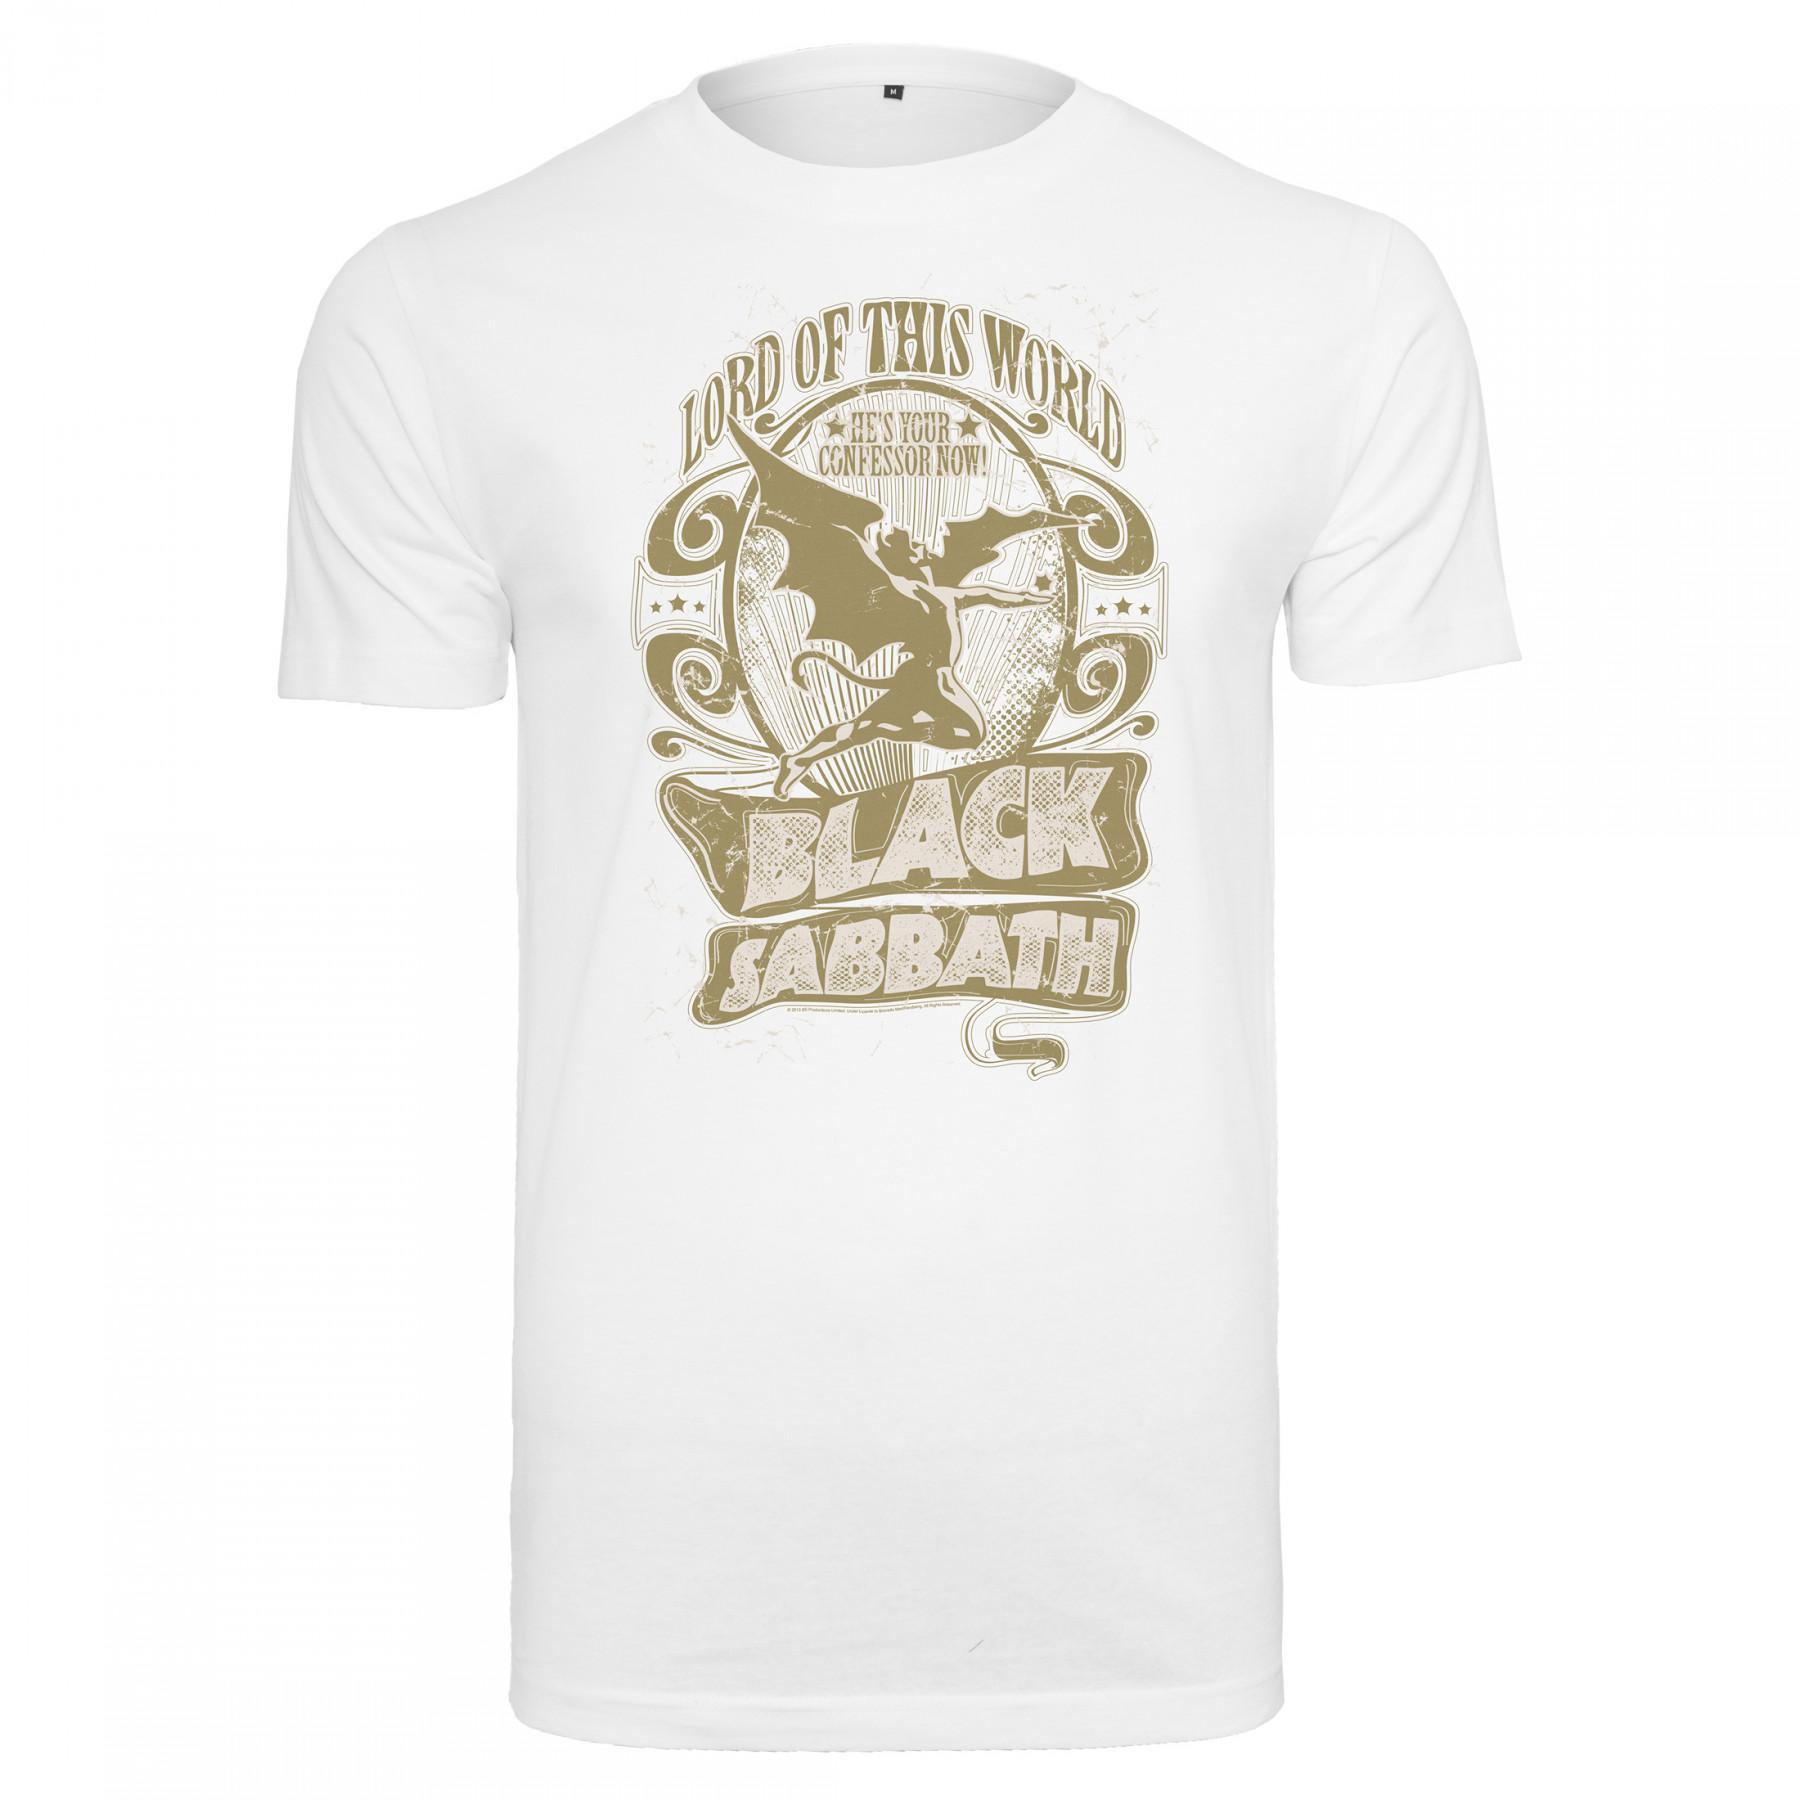 T-shirt Urban Classic bla abbath lotw white